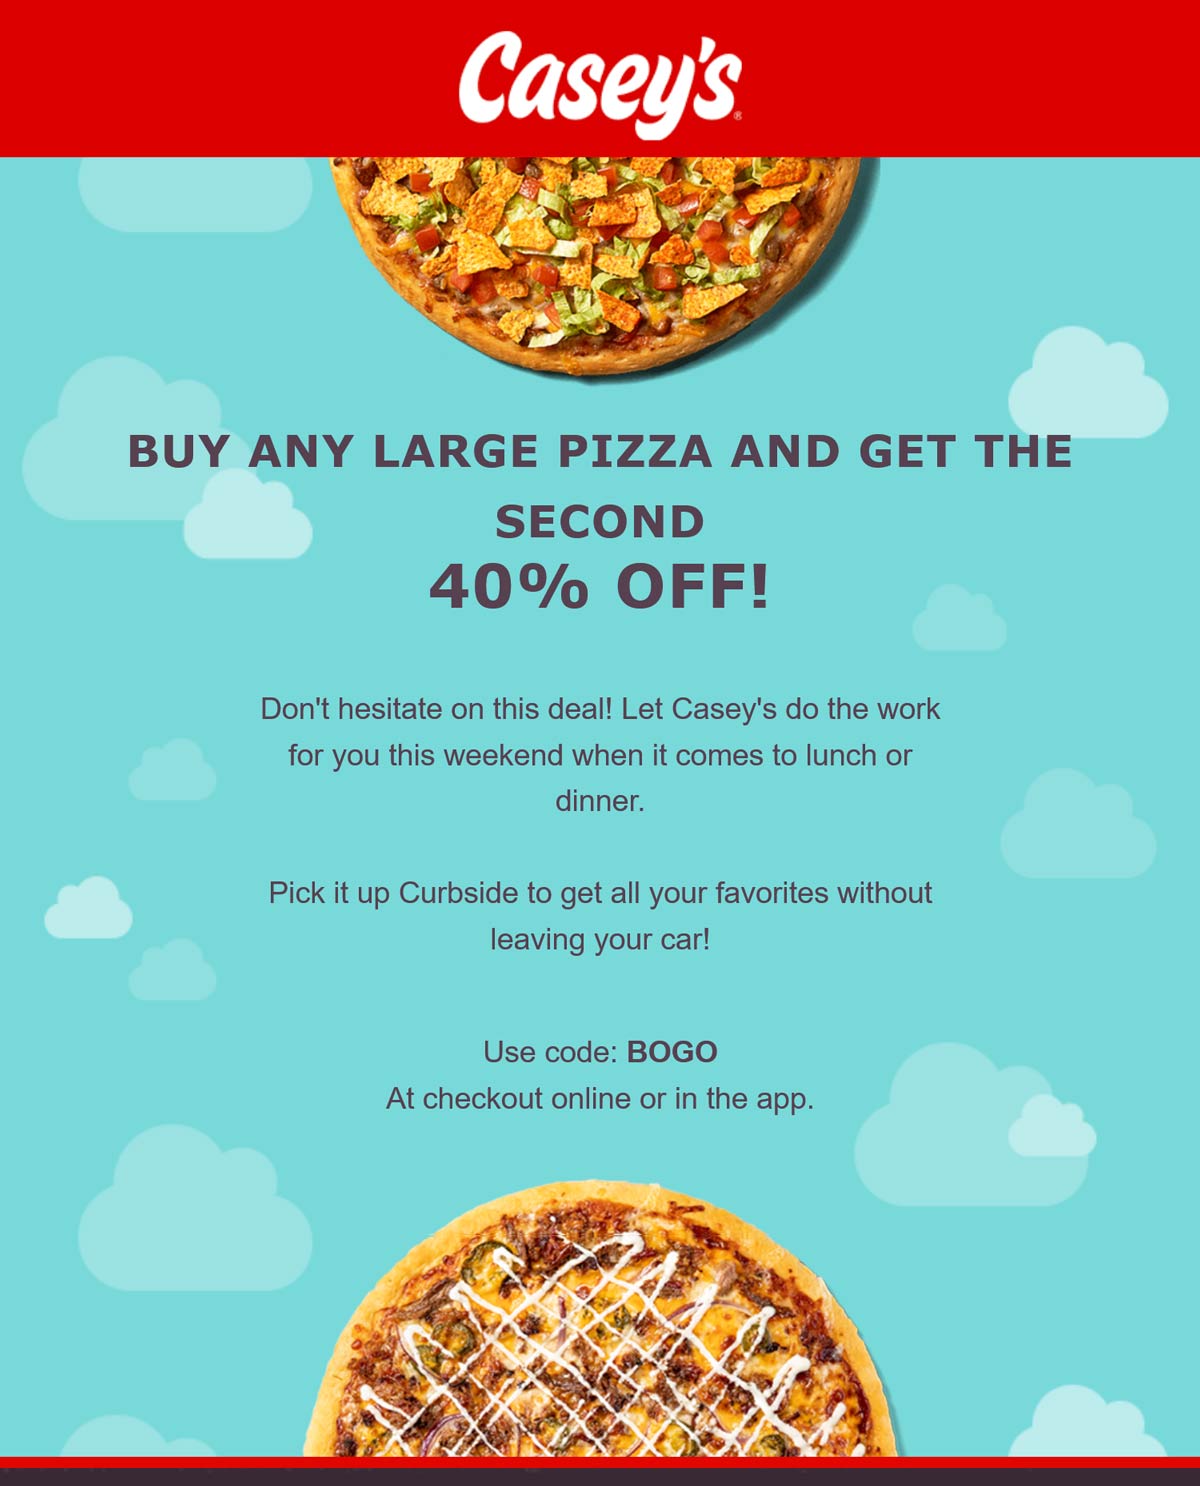 Caseys restaurants Coupon  Second pizza 40% off at Caseys General Store gas stations via promo code BOGO #caseys 